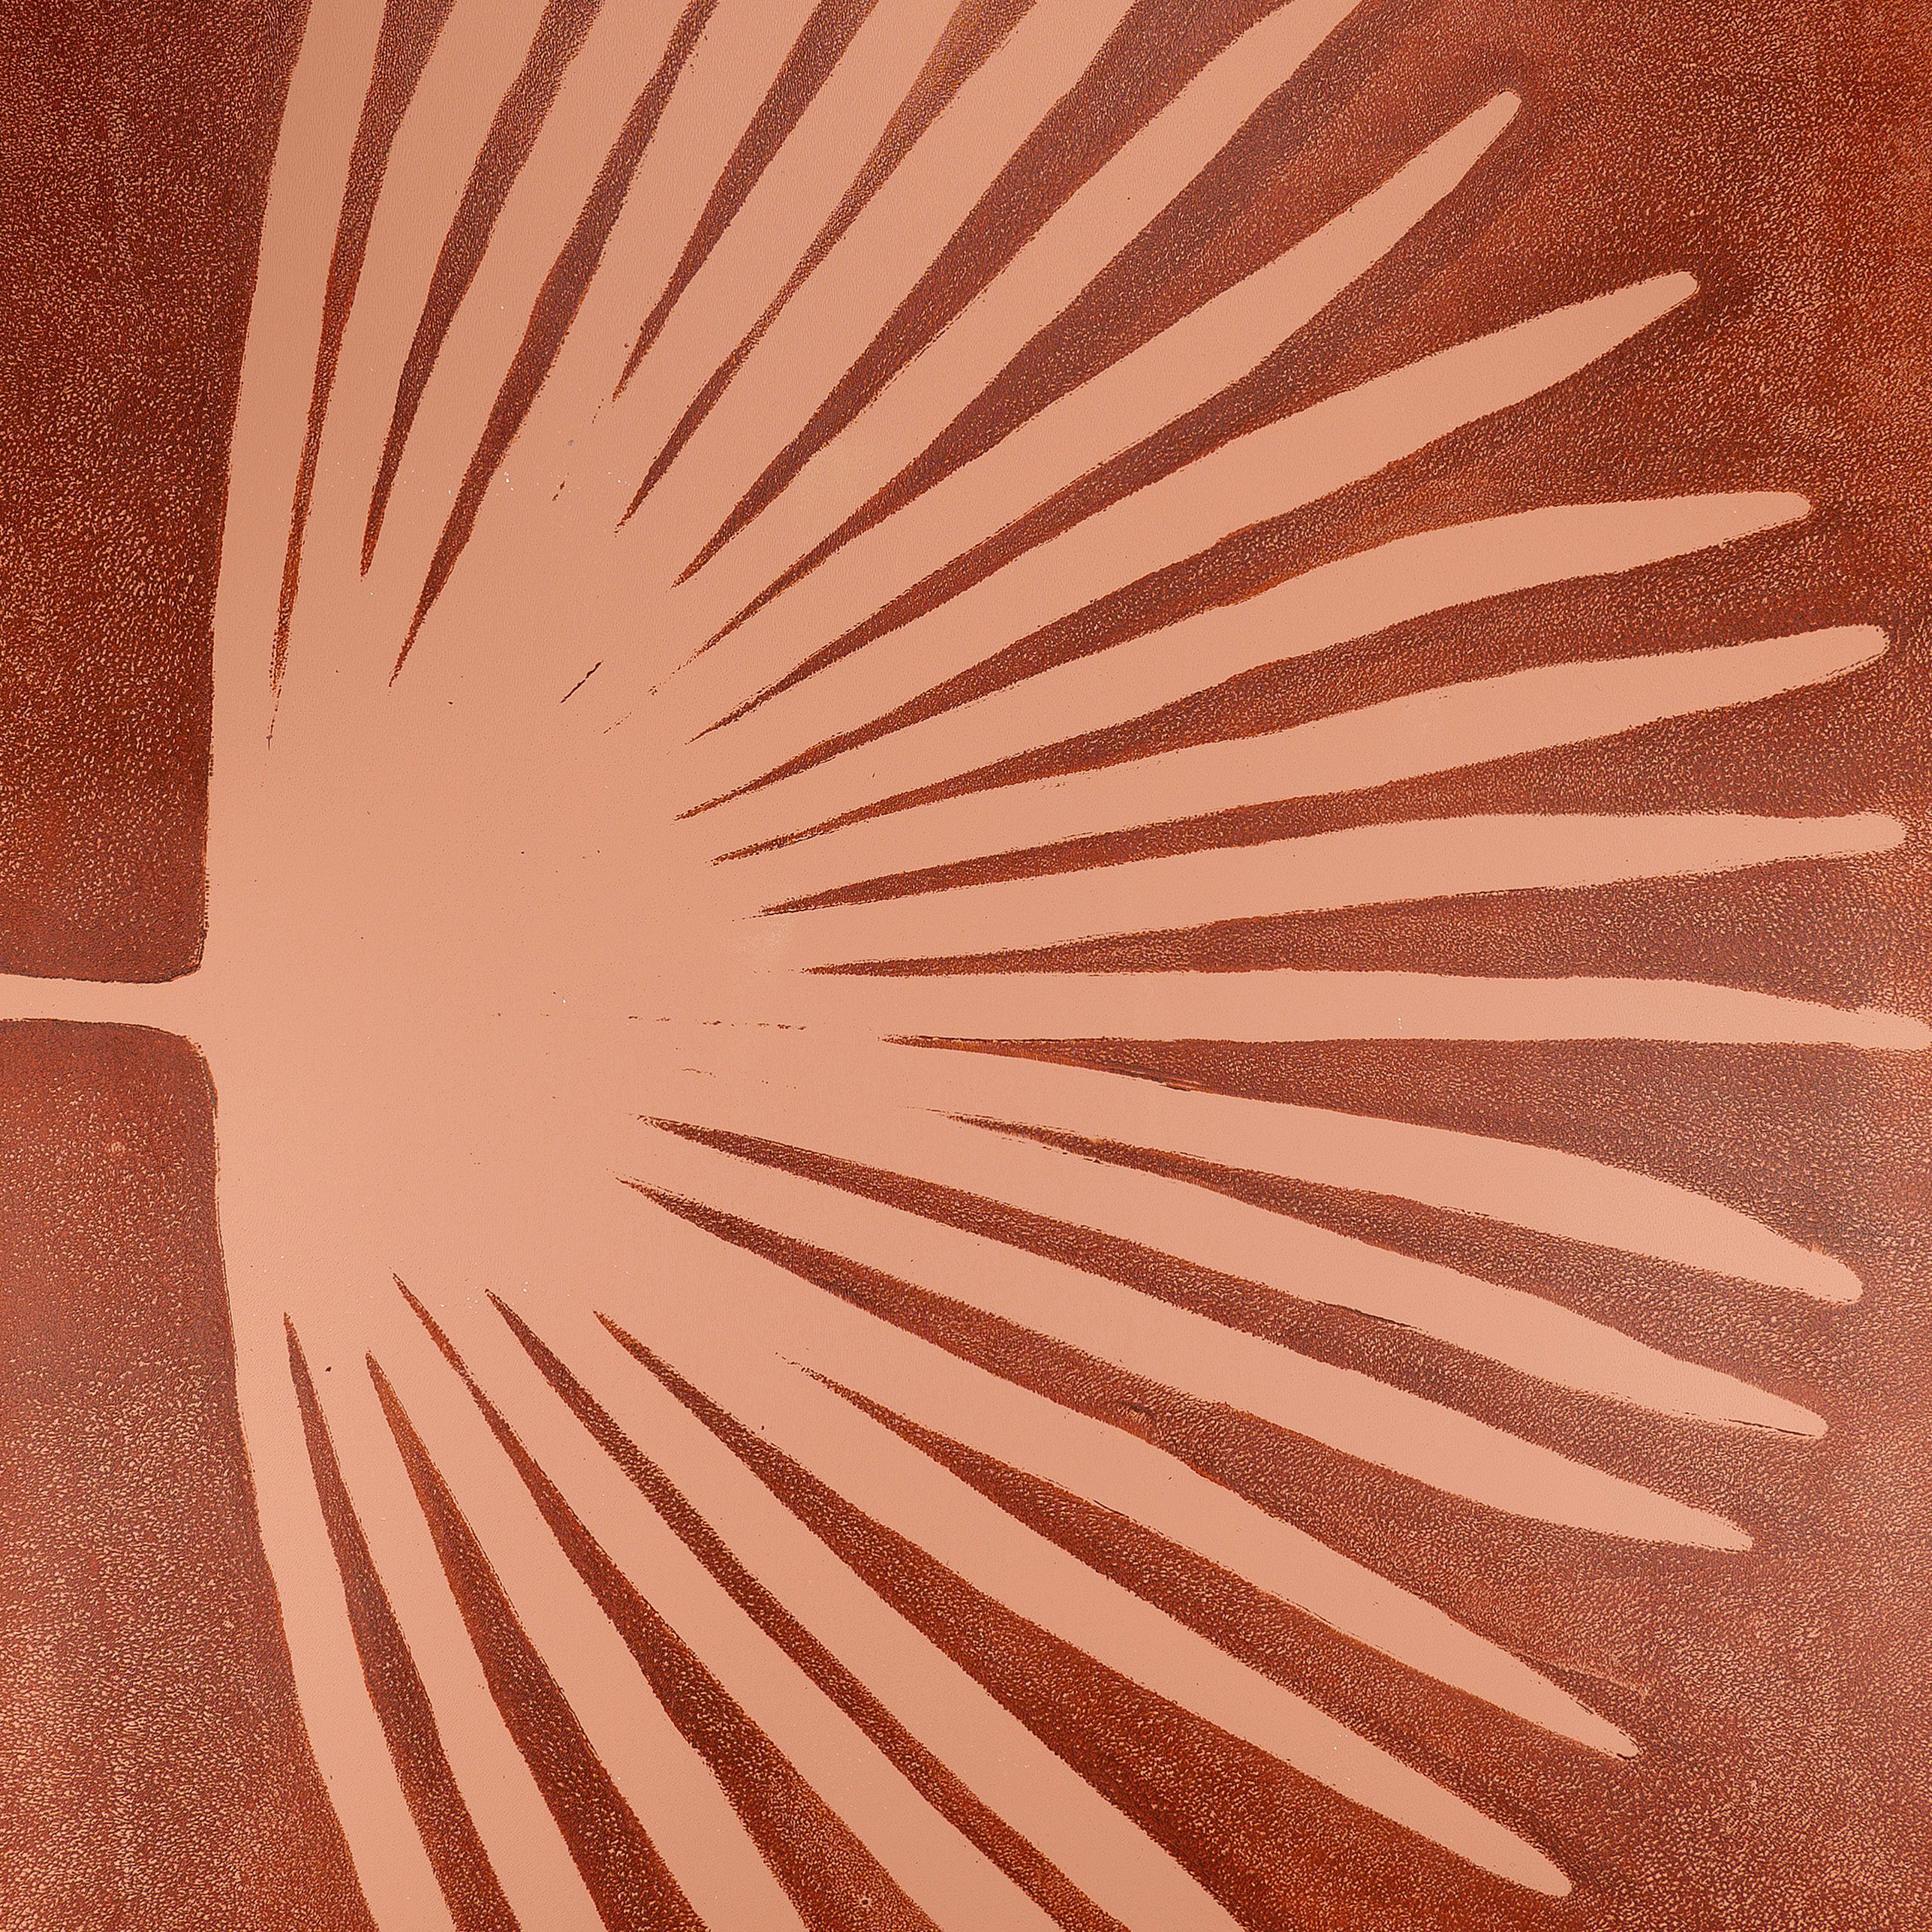 Terra and nude botanical print with palm branch I Handmade poster Enkel Art Studio